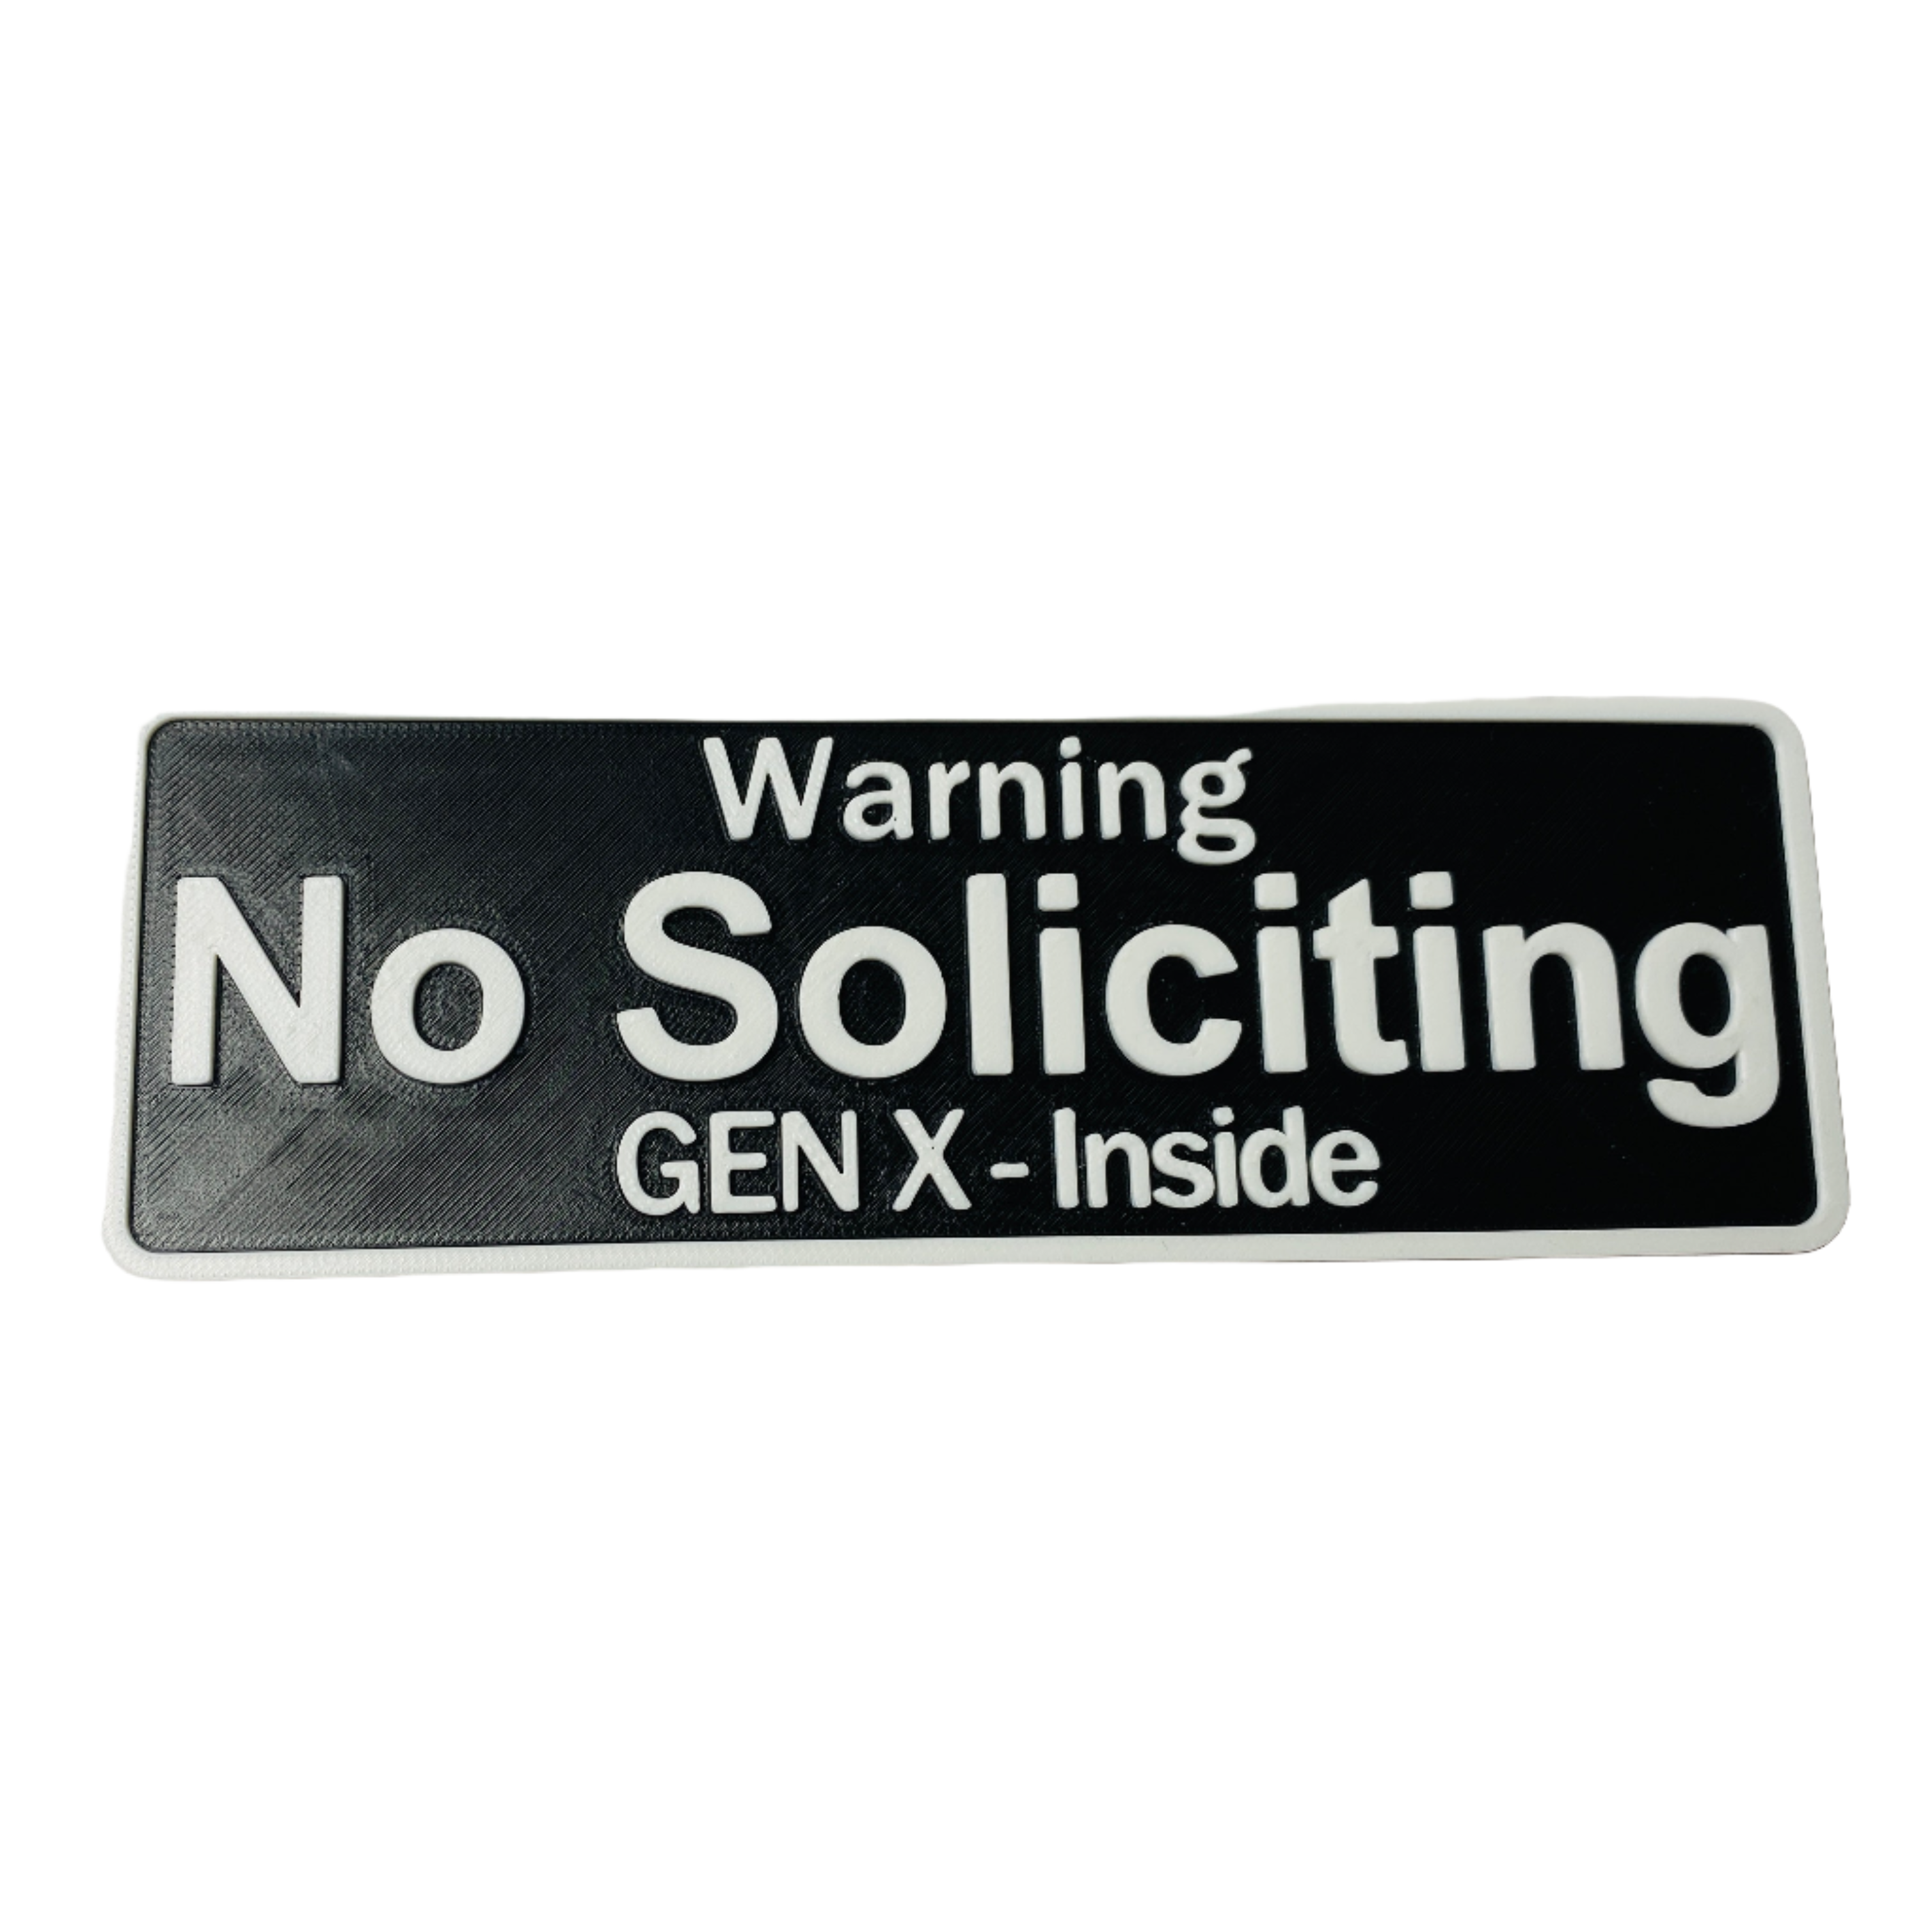 No Soliciting Gen X Inside custom sign